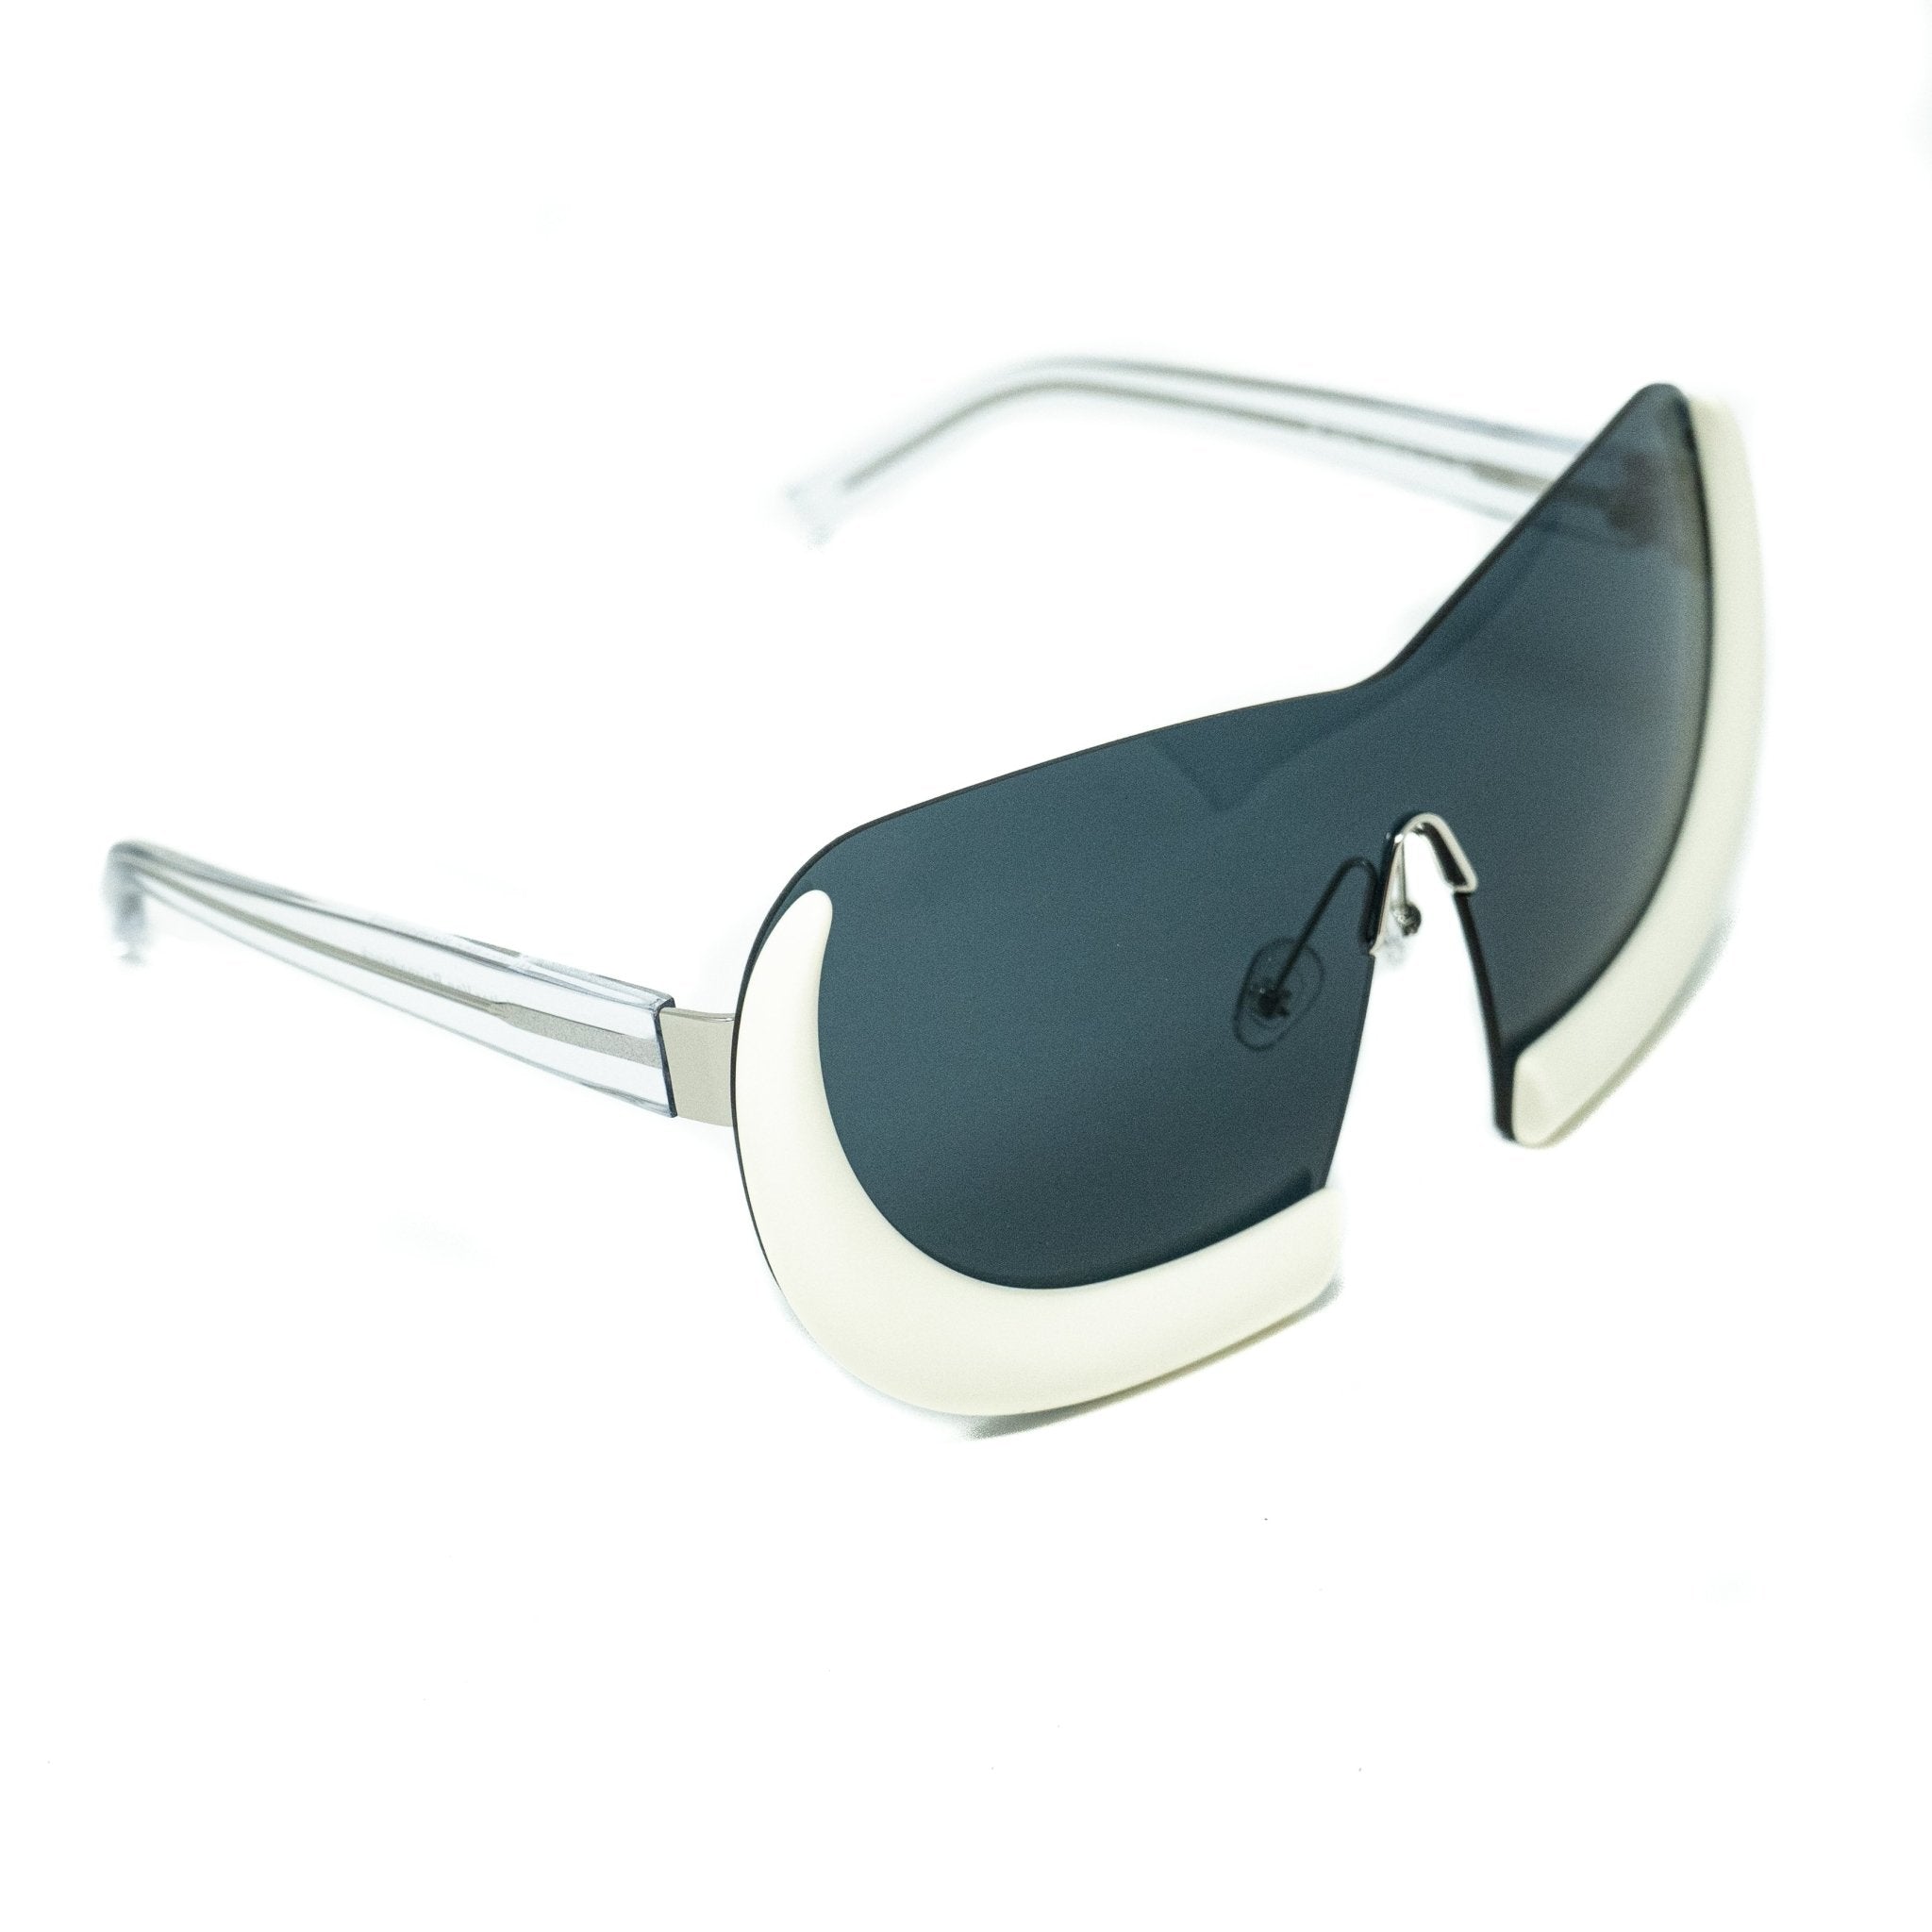 walter van beirendonck sunglasses special shield frame with grey lenses wvb6c2sun 184652 a87aeb03 736b 46d4 8d46 038c737d3d1f